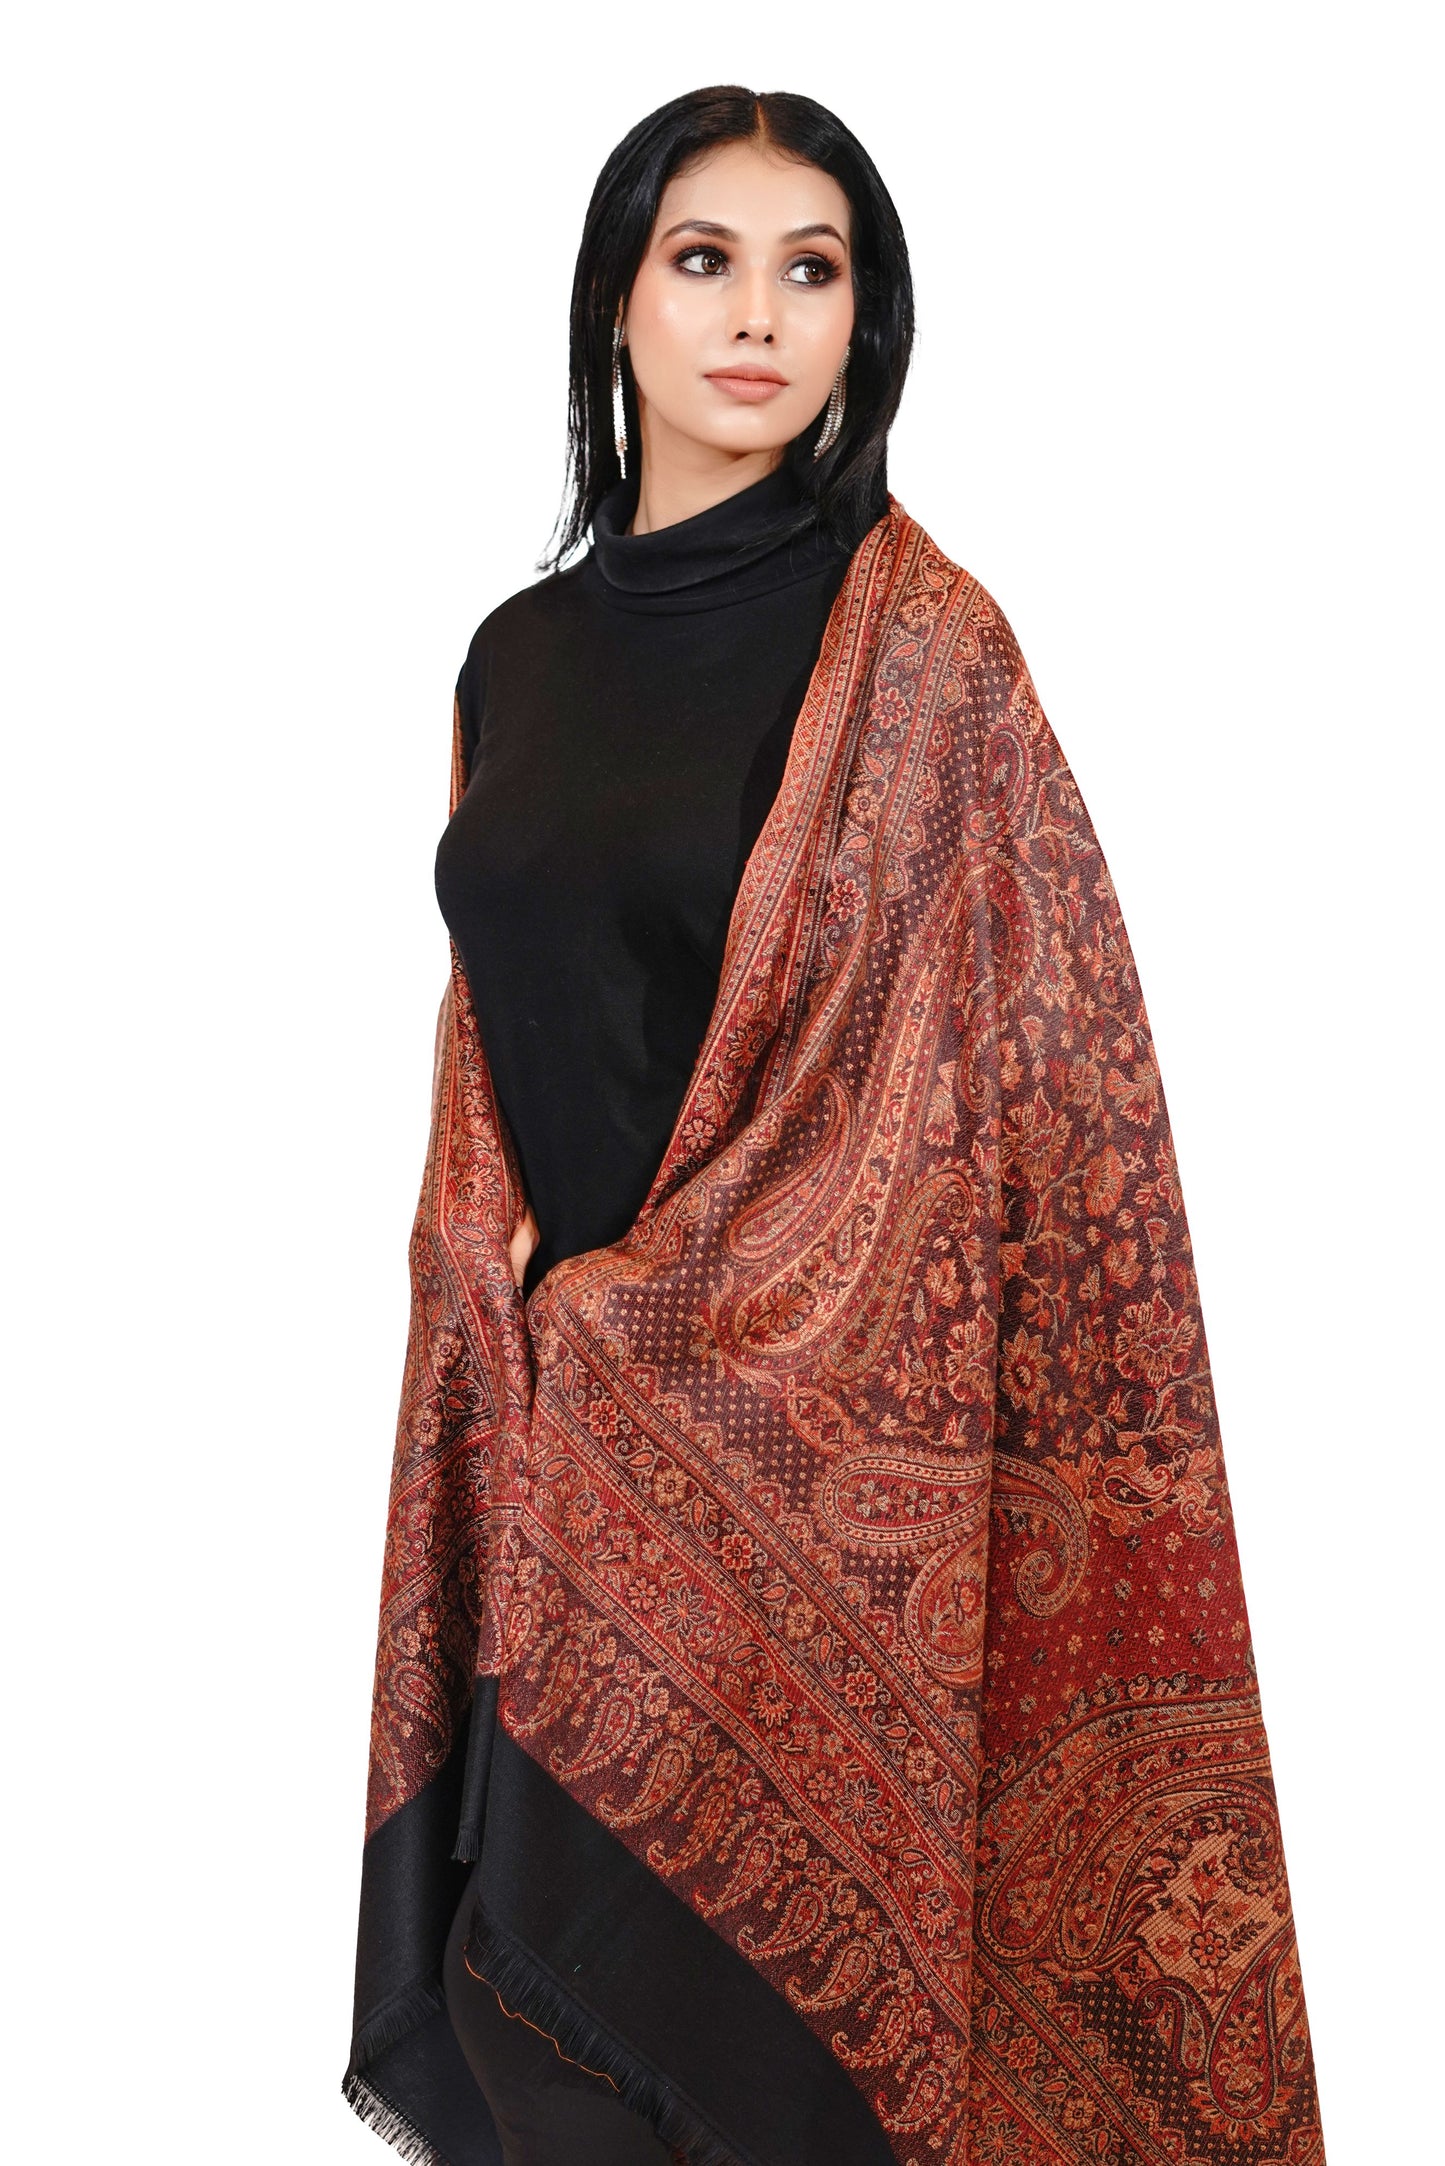 Women's Traditional Pashmina Faux Shawl- Black & Maroon Mosaic